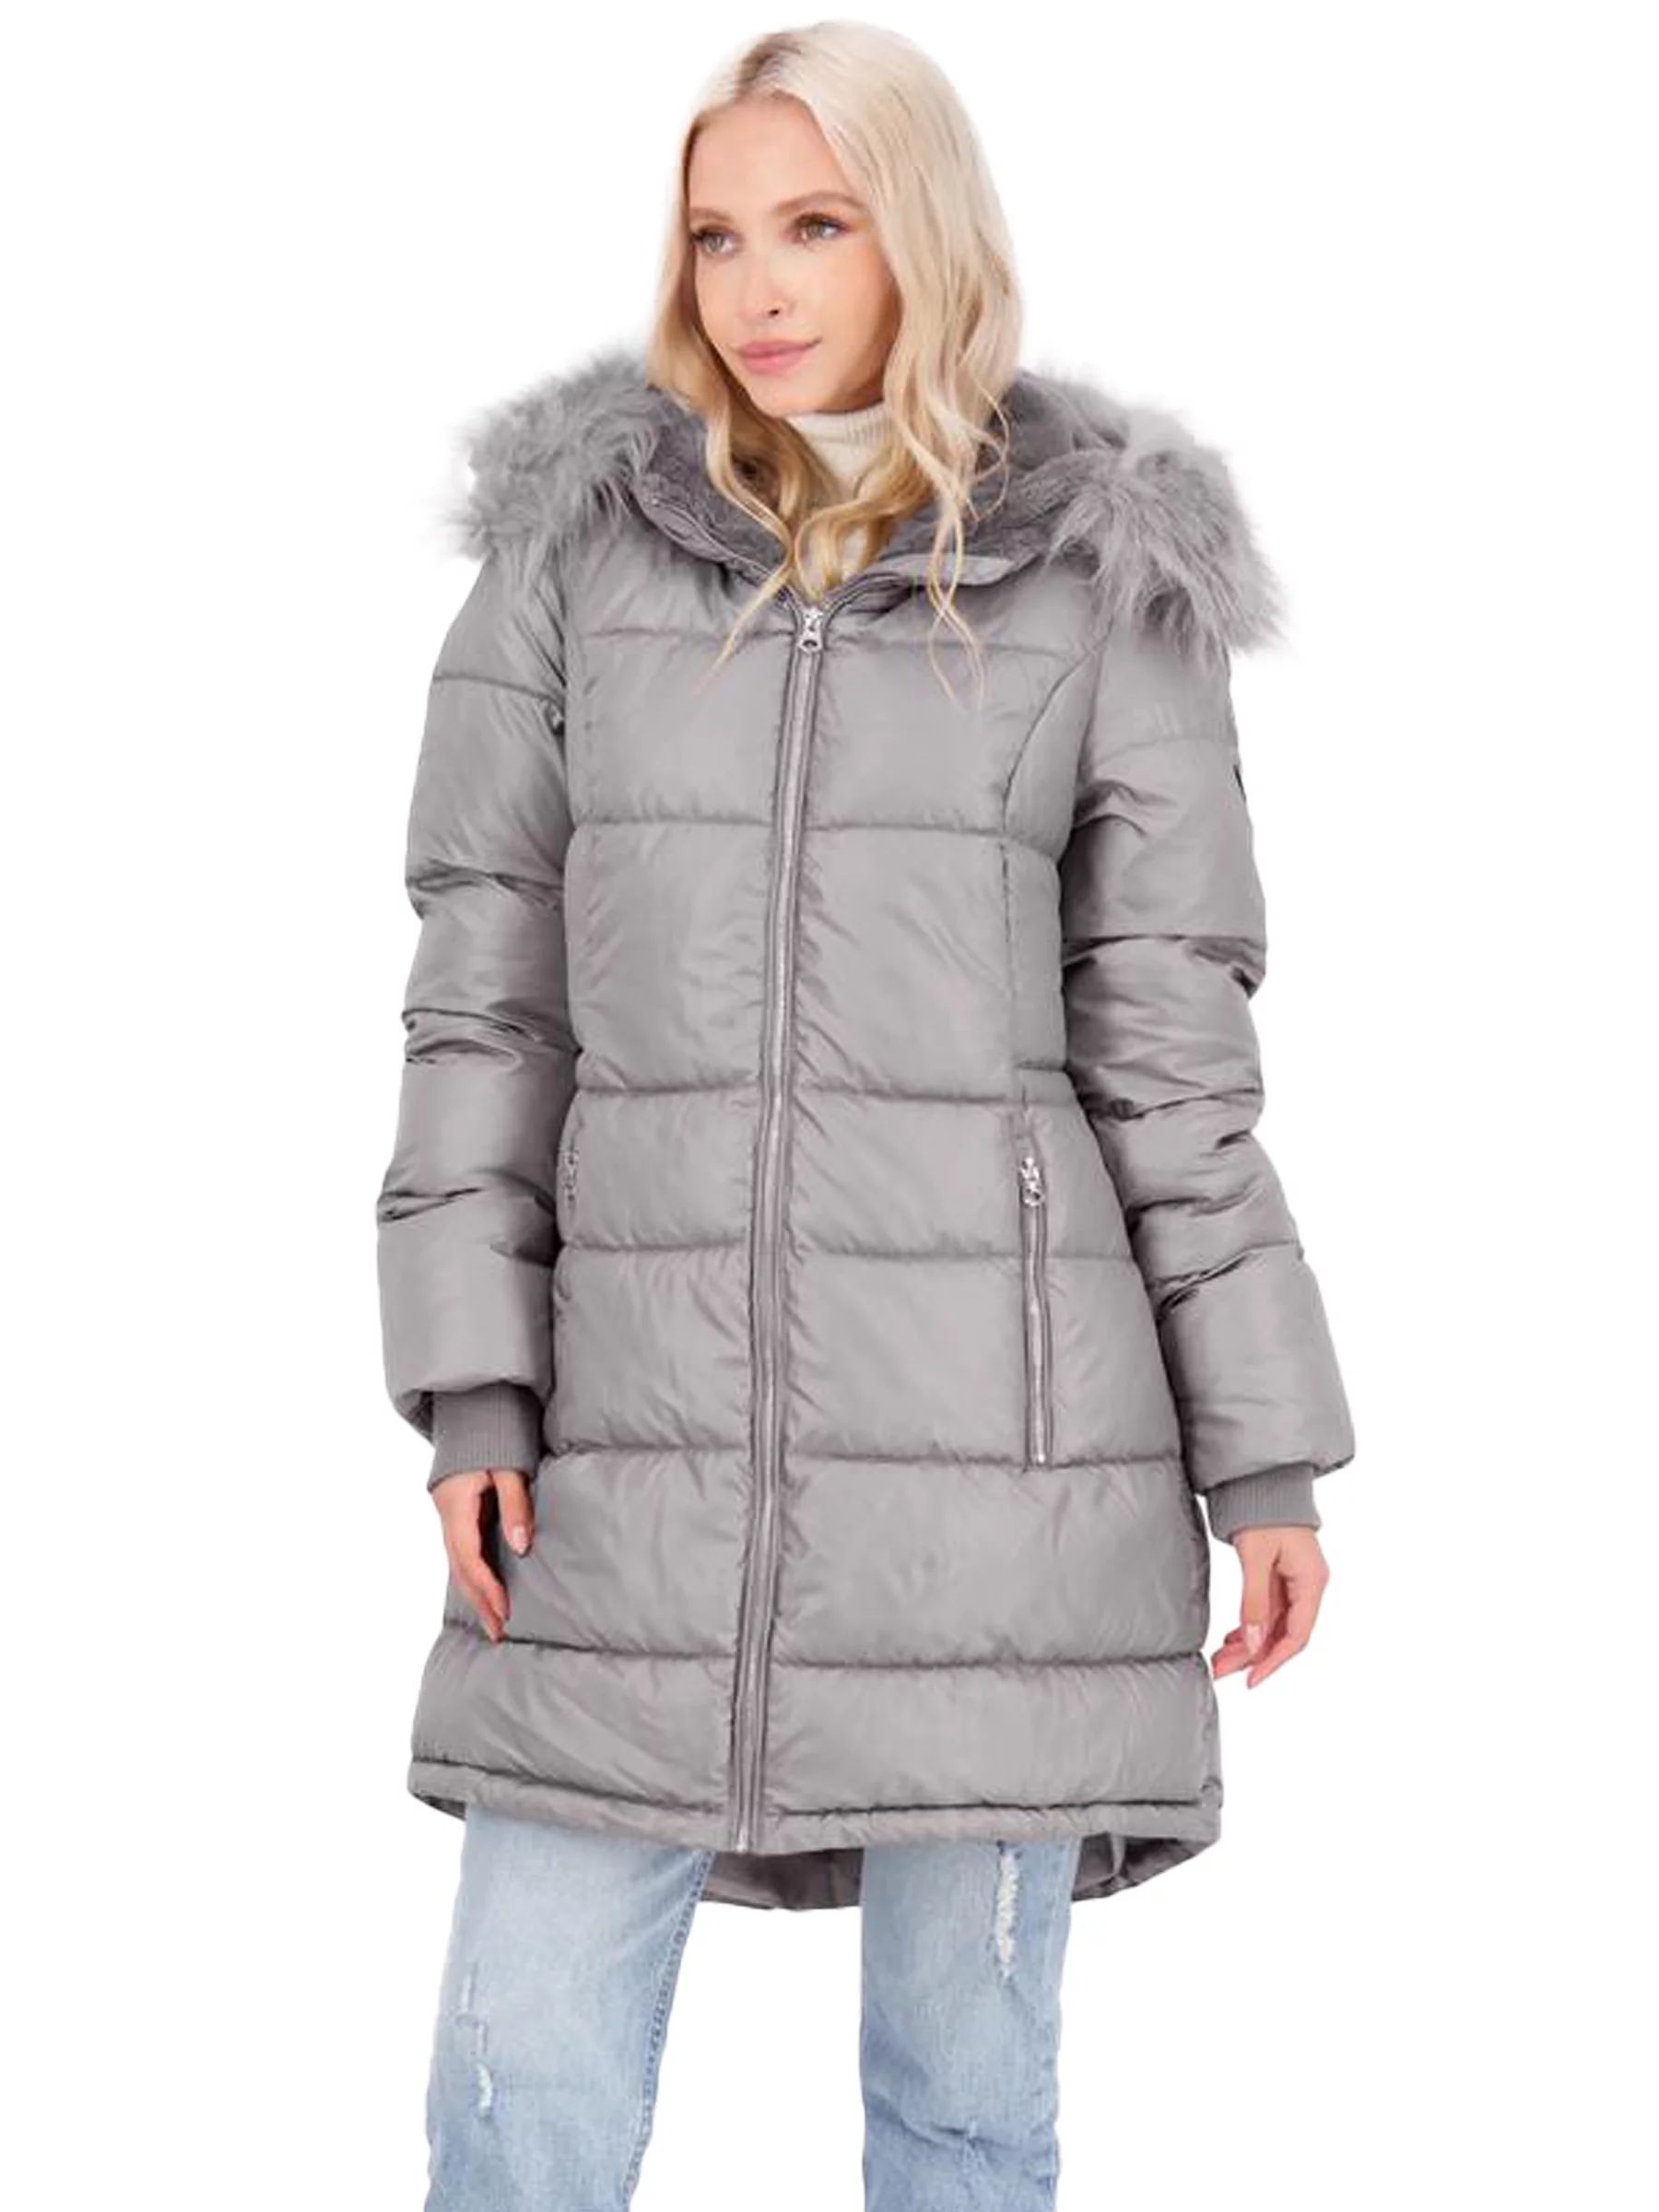 Jessica Simpson Puffer Coat For Women - Quilted Winter Coat w/ Faux Fur Hood | Walmart (US)